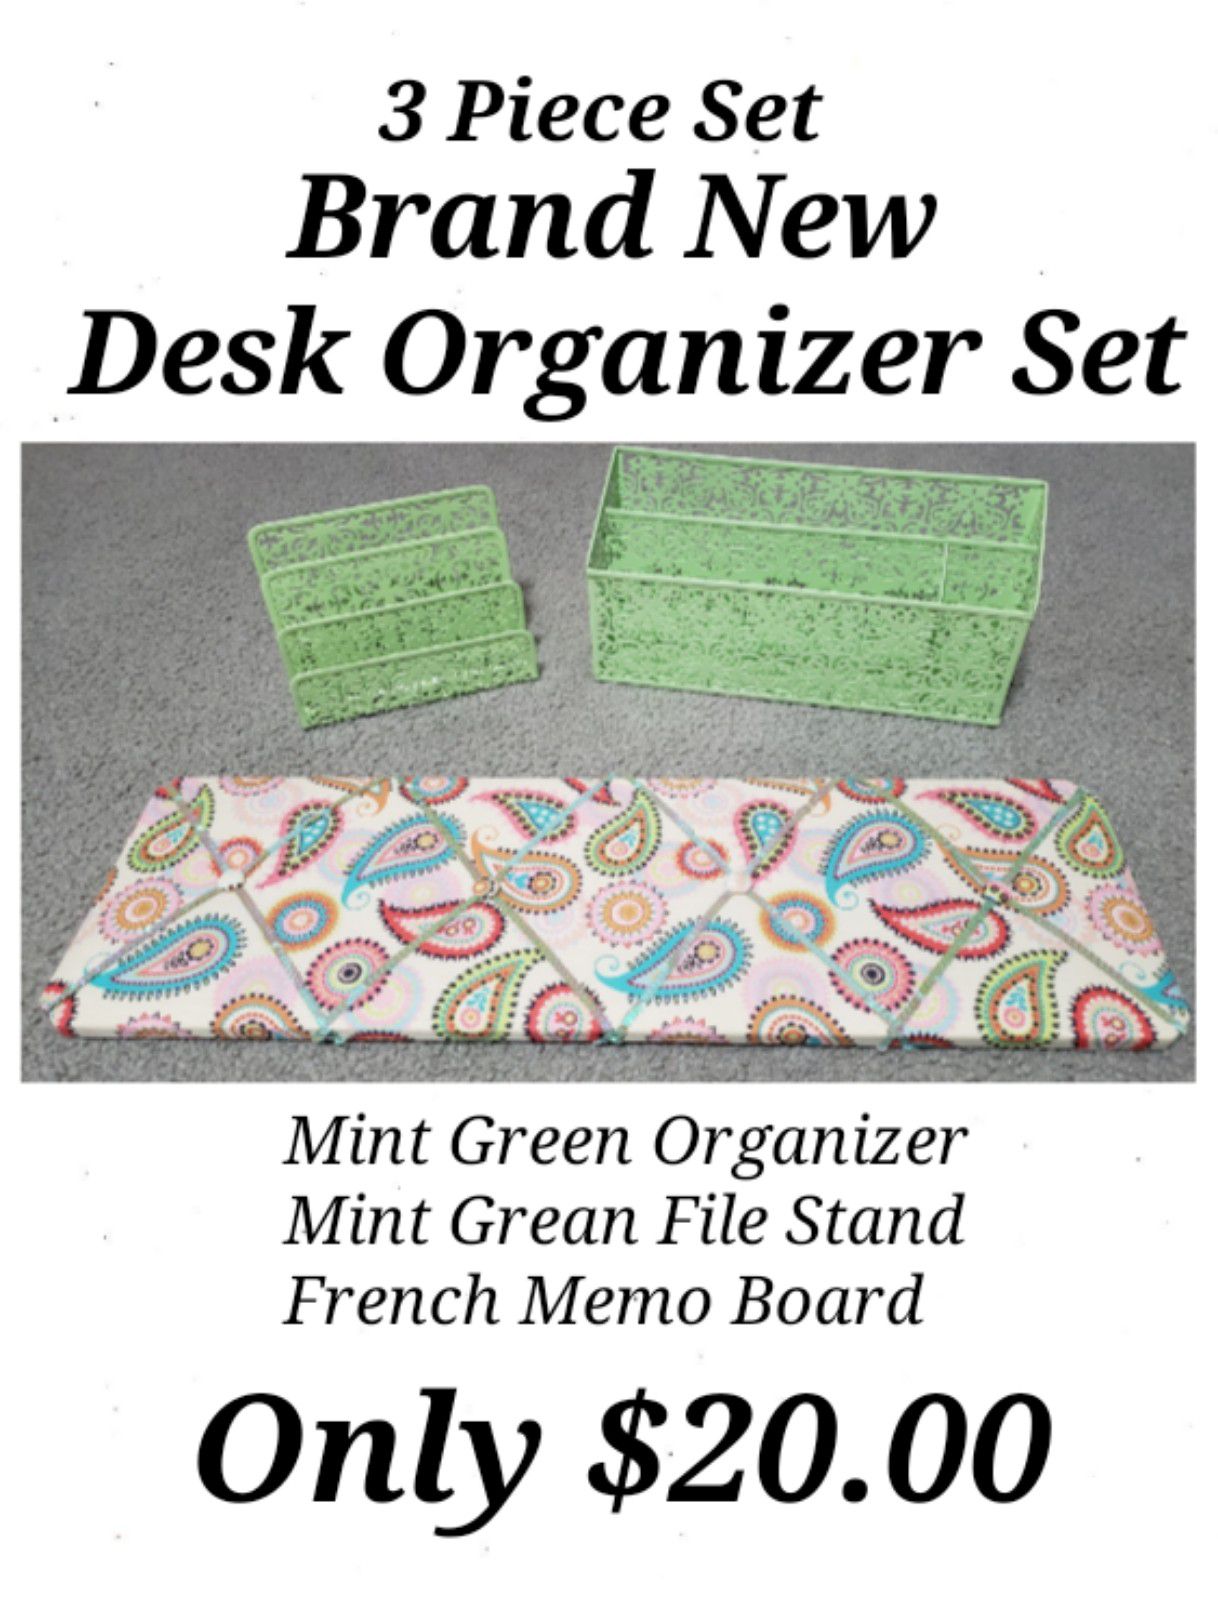 Brand New 3 Piece Office Desk Set - French Memo Board, File Stand & Organizer